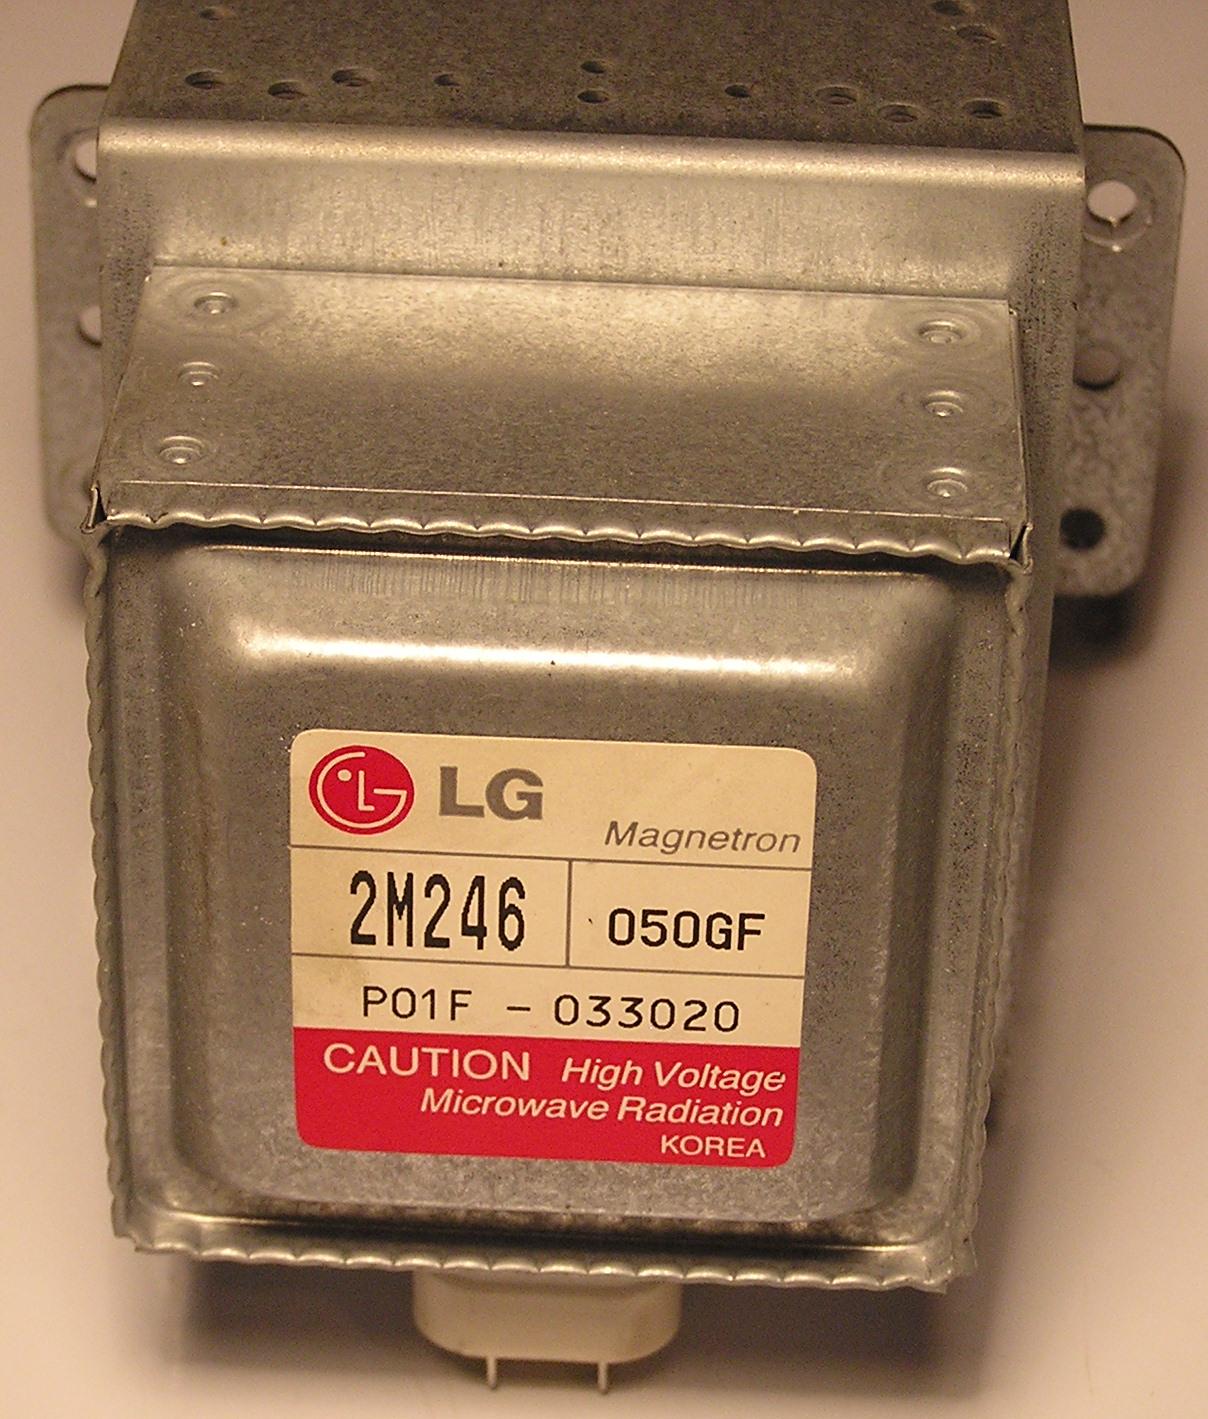 LG 2M246 P01F 050GF microwave magnetron